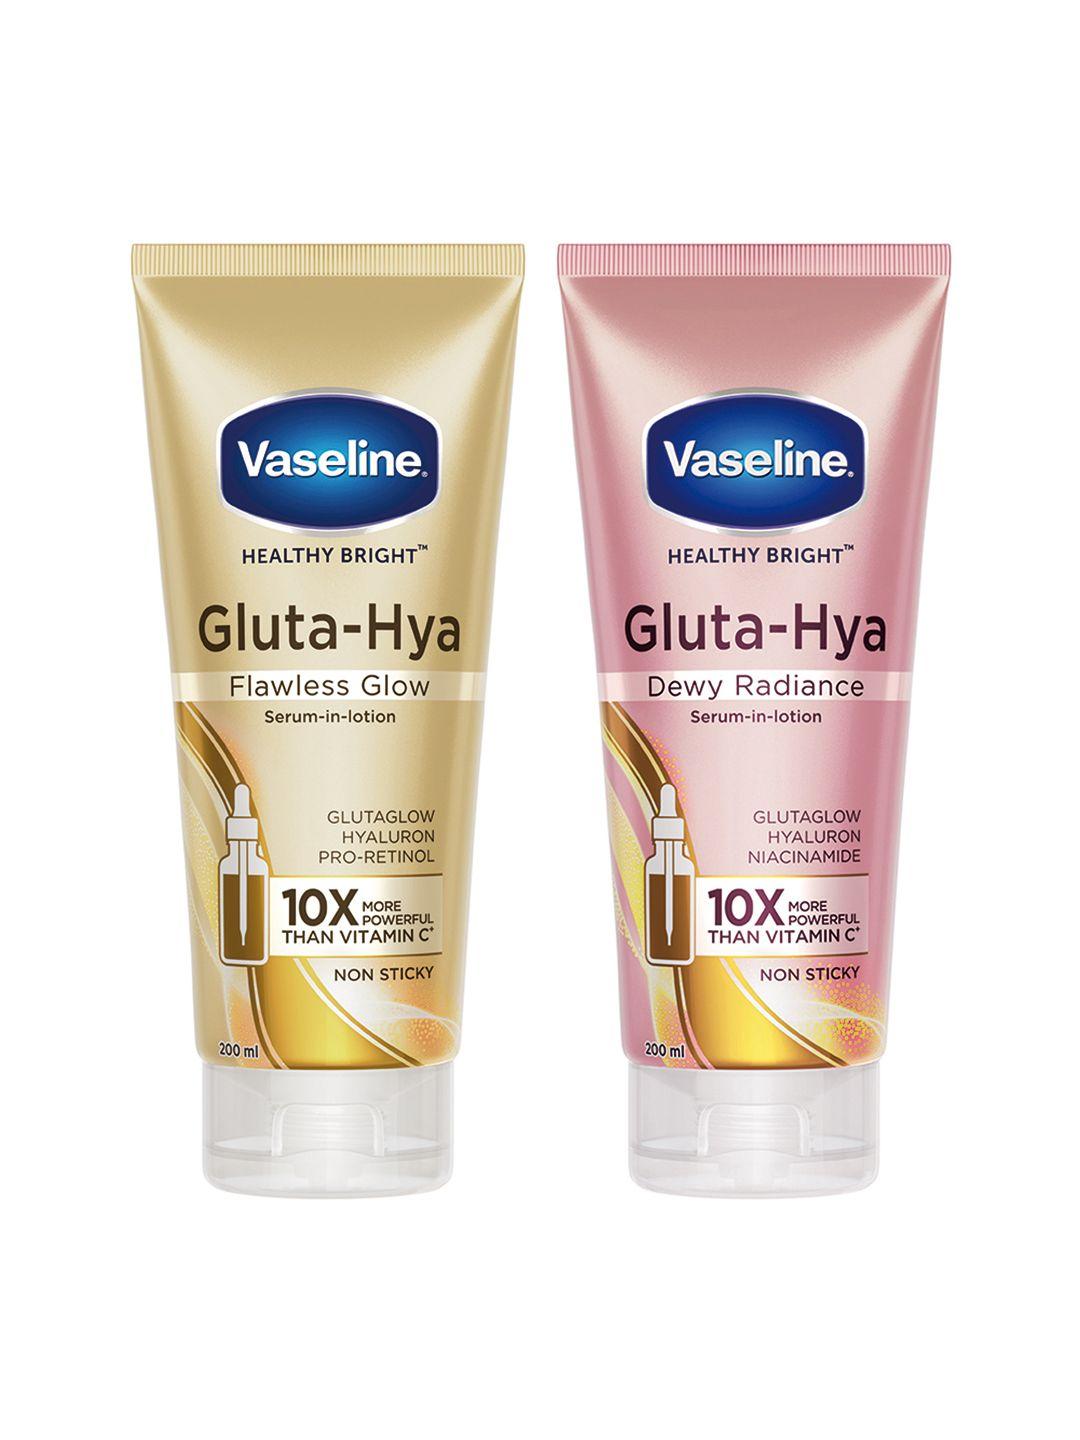 vaseline set of 2 gluta hya serum-in-lotion - dewy radiance & flawless glow - 200ml each